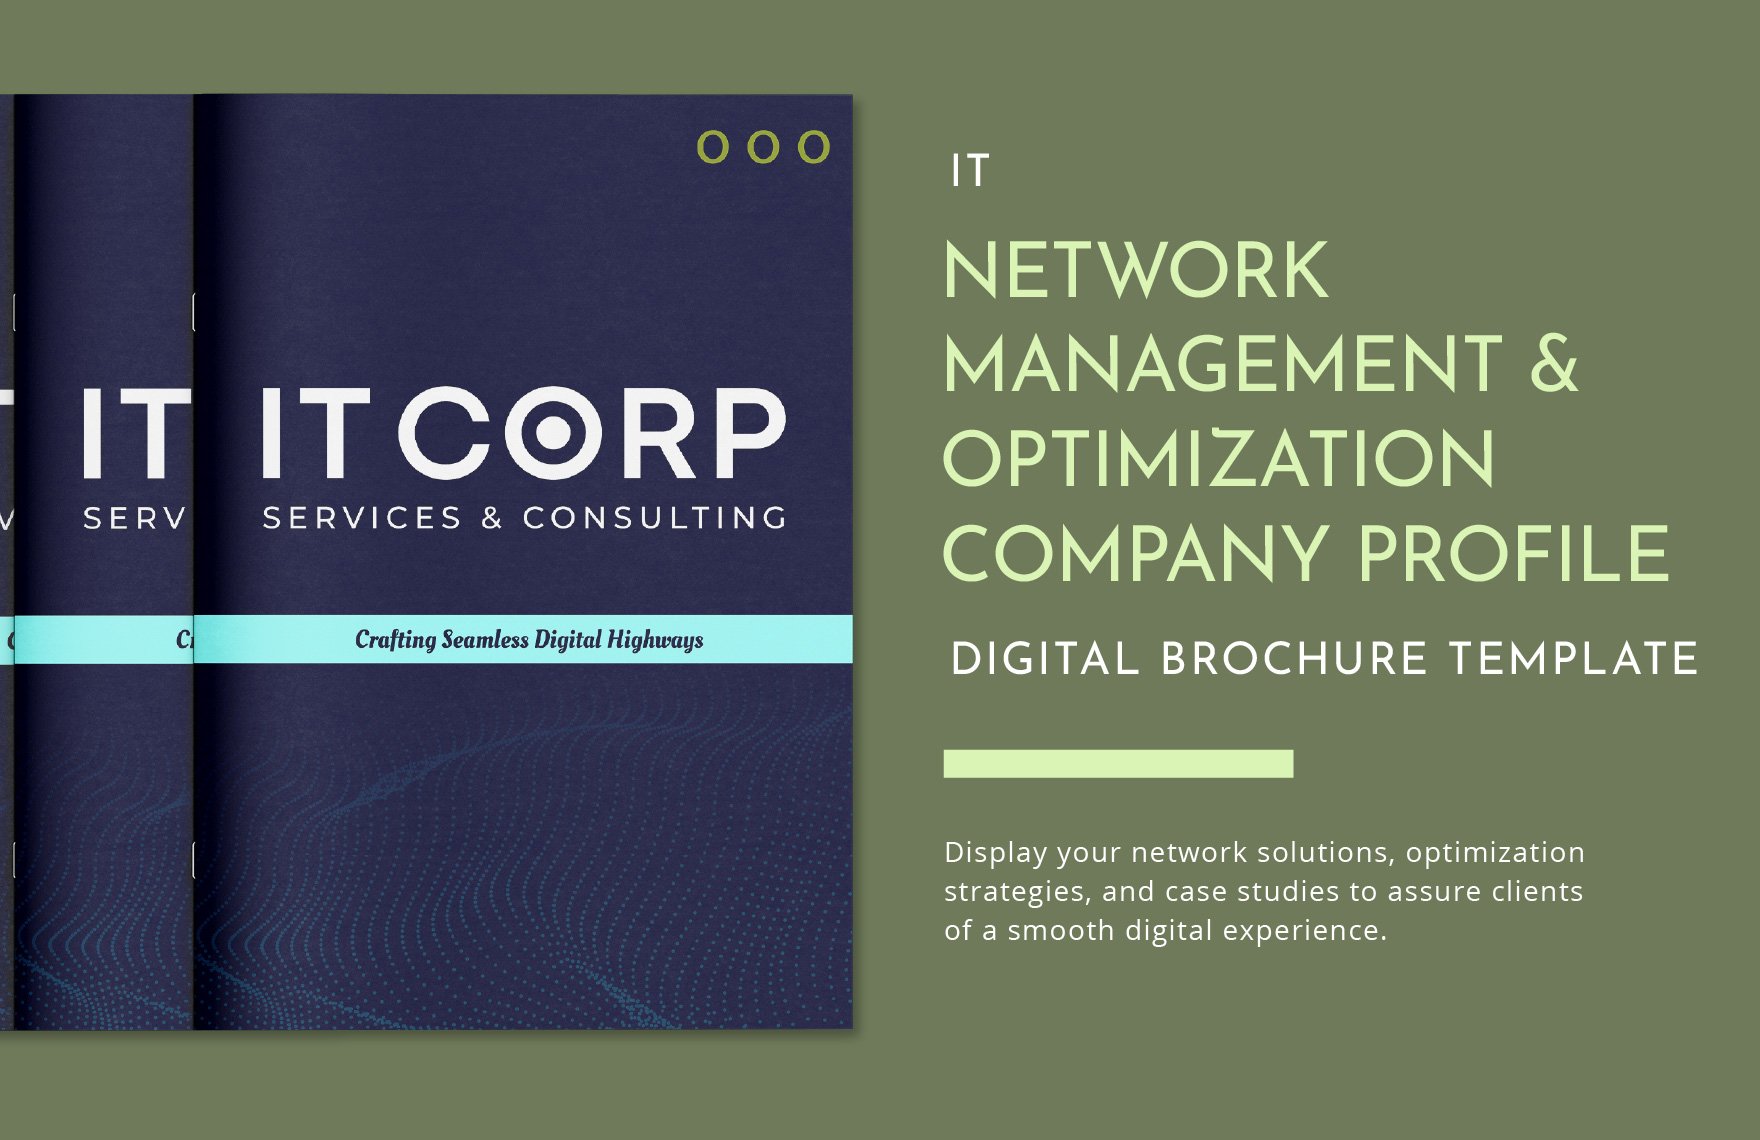 IT Network Management & Optimization Company Profile Digital Brochure Template